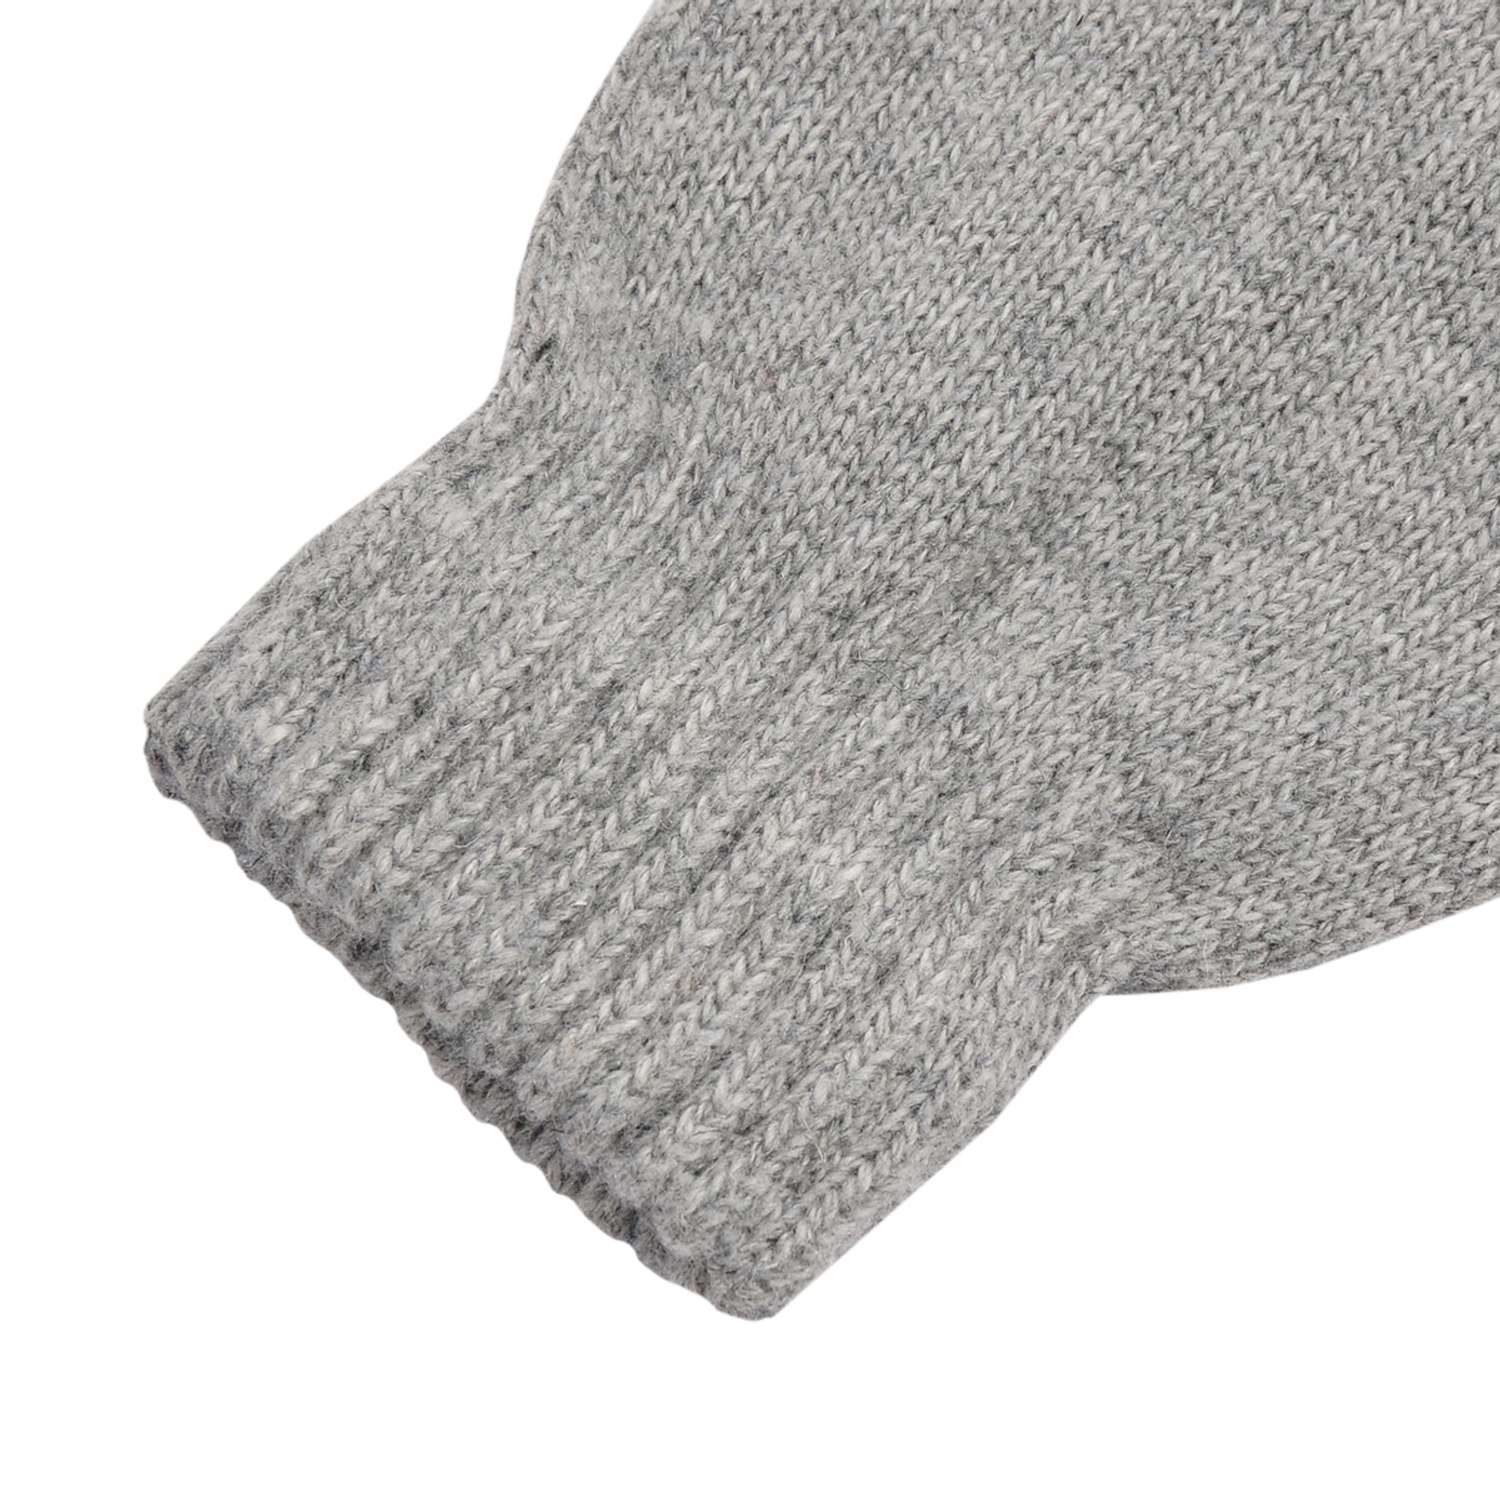 Перчатки S.gloves S 2163-M серый - фото 2